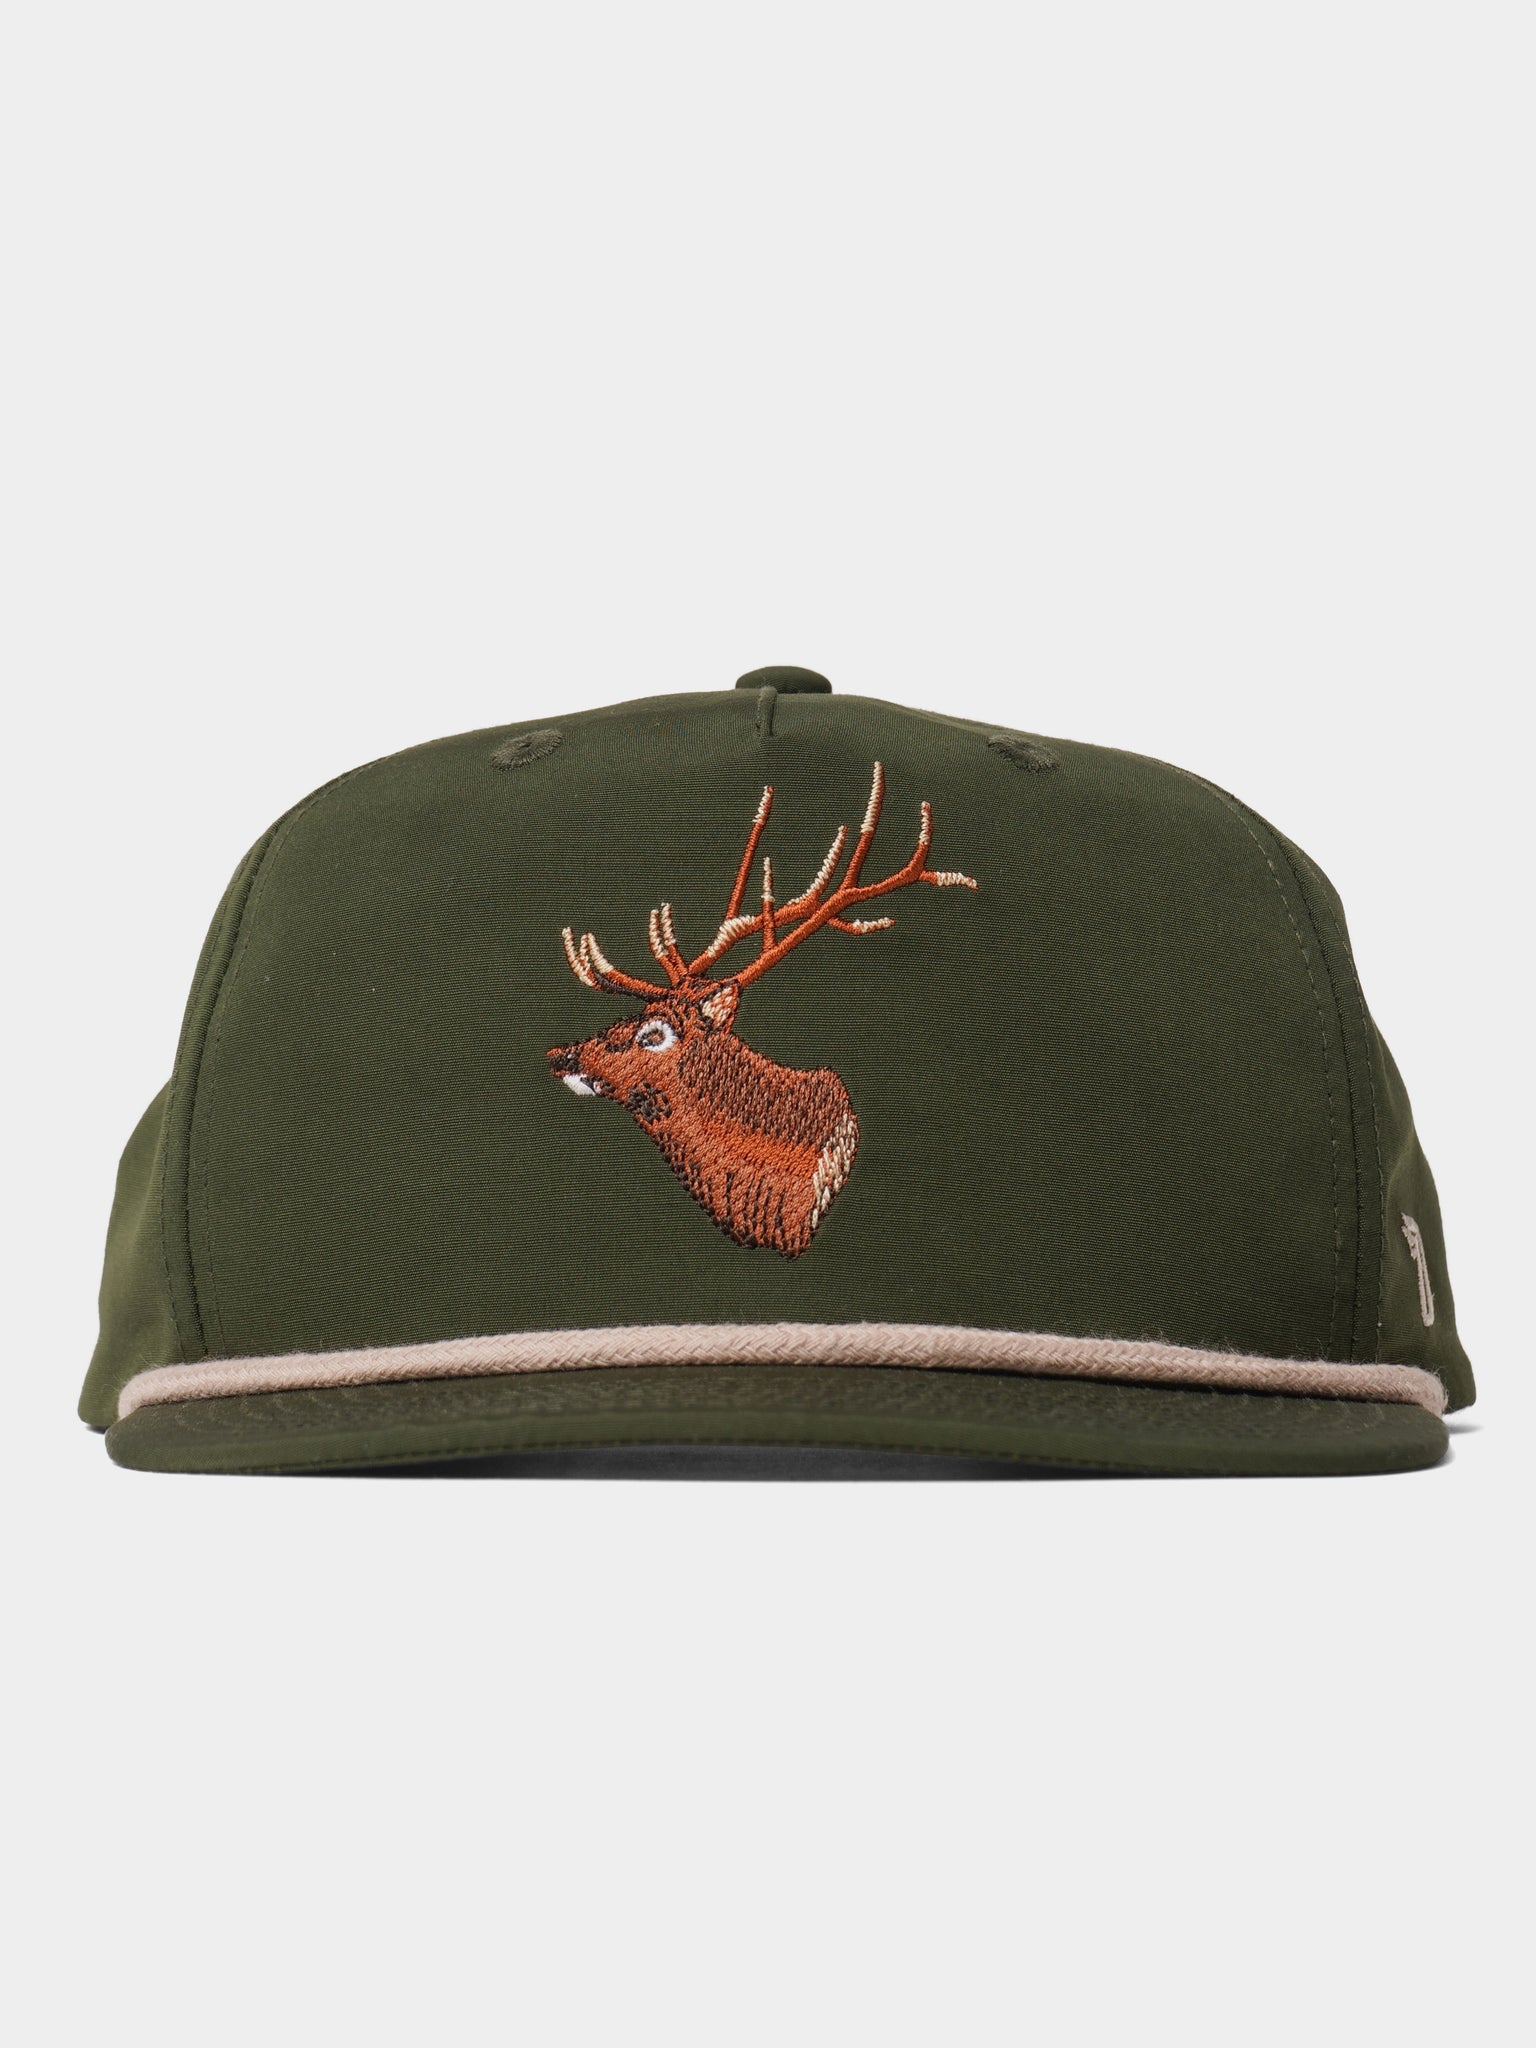 KEHUASW designatedd Drinker caps Camping hat Apricot hat for Men Gifts for  Daughter Golf Caps